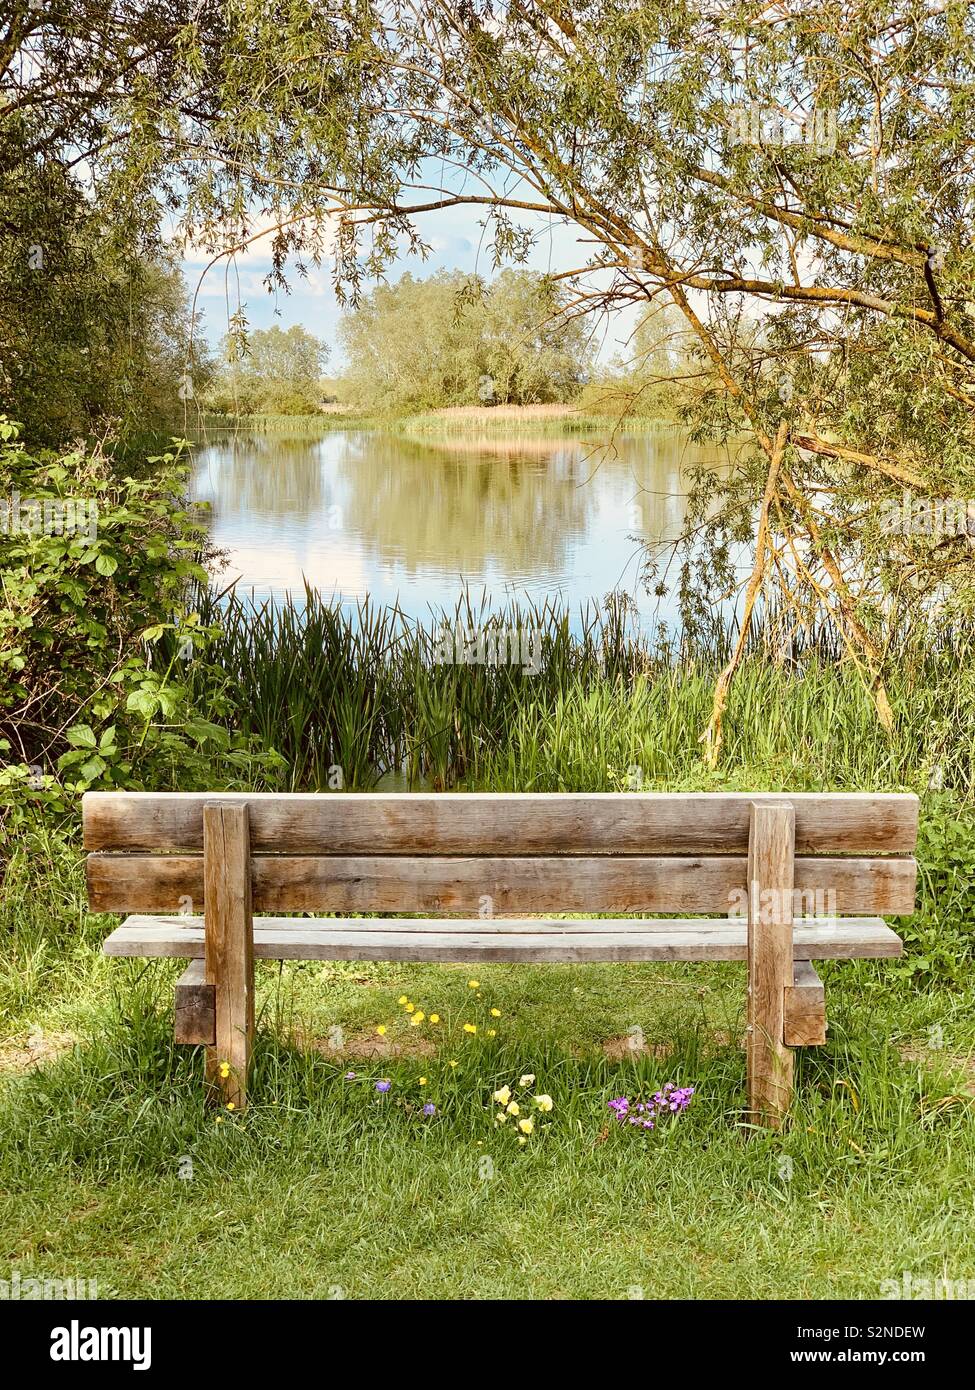 Memorial bench next to lake. Stock Photo